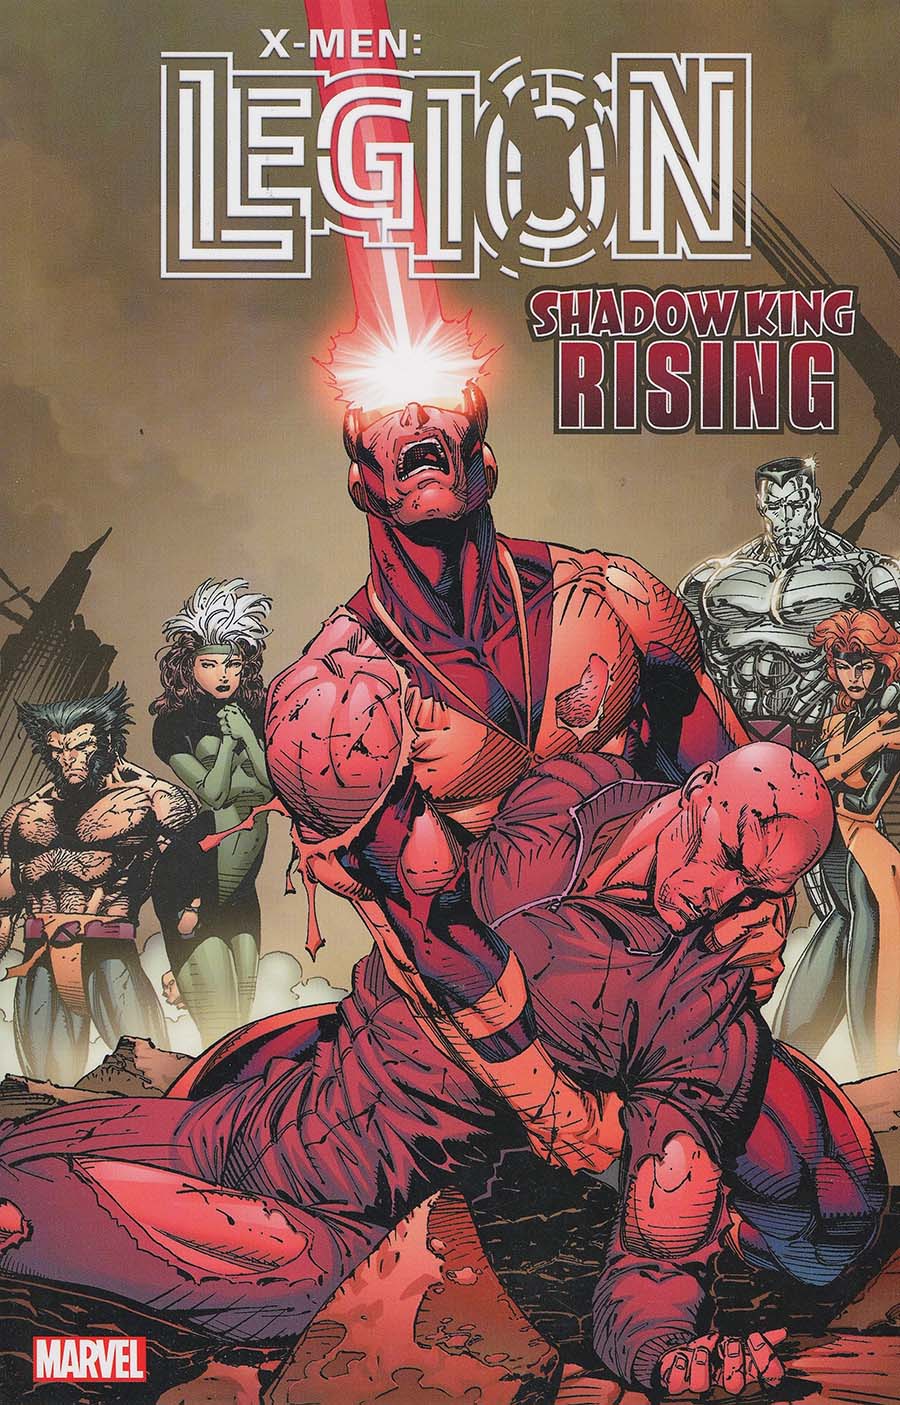 X-Men Legion Shadow King Rising TP